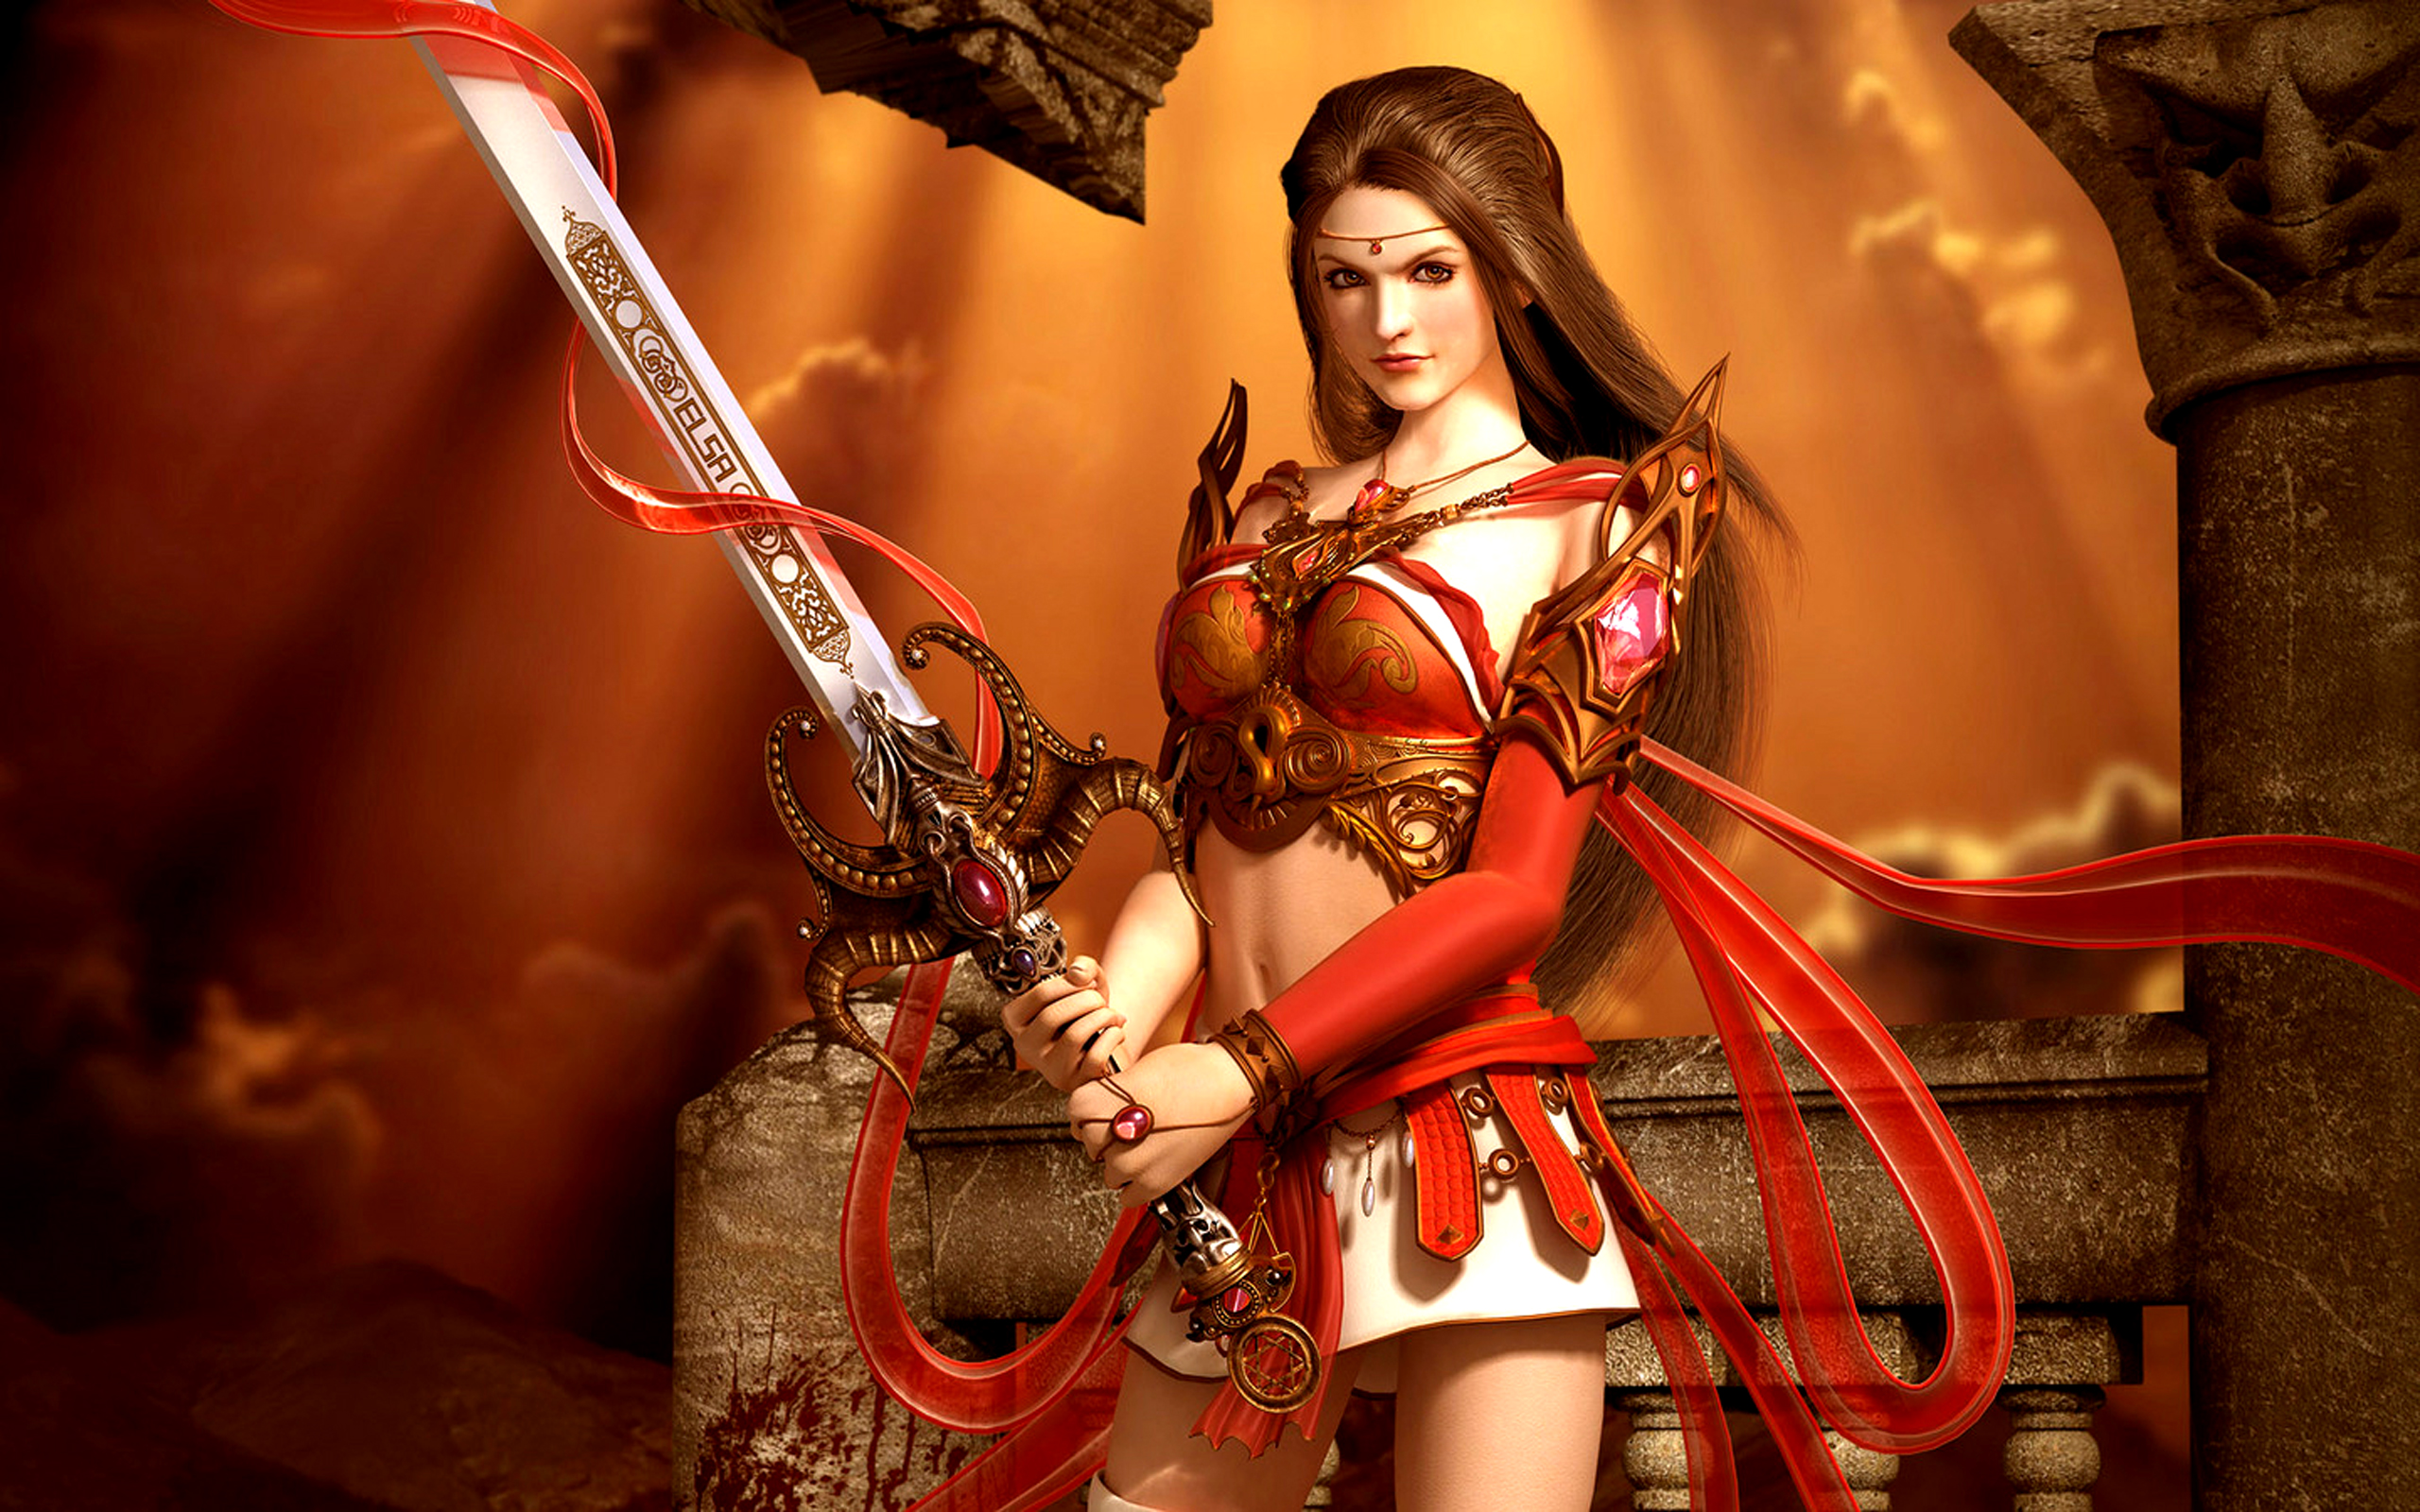 Fantasy dark warrior woman desktop wallpaper by Soa Lee.